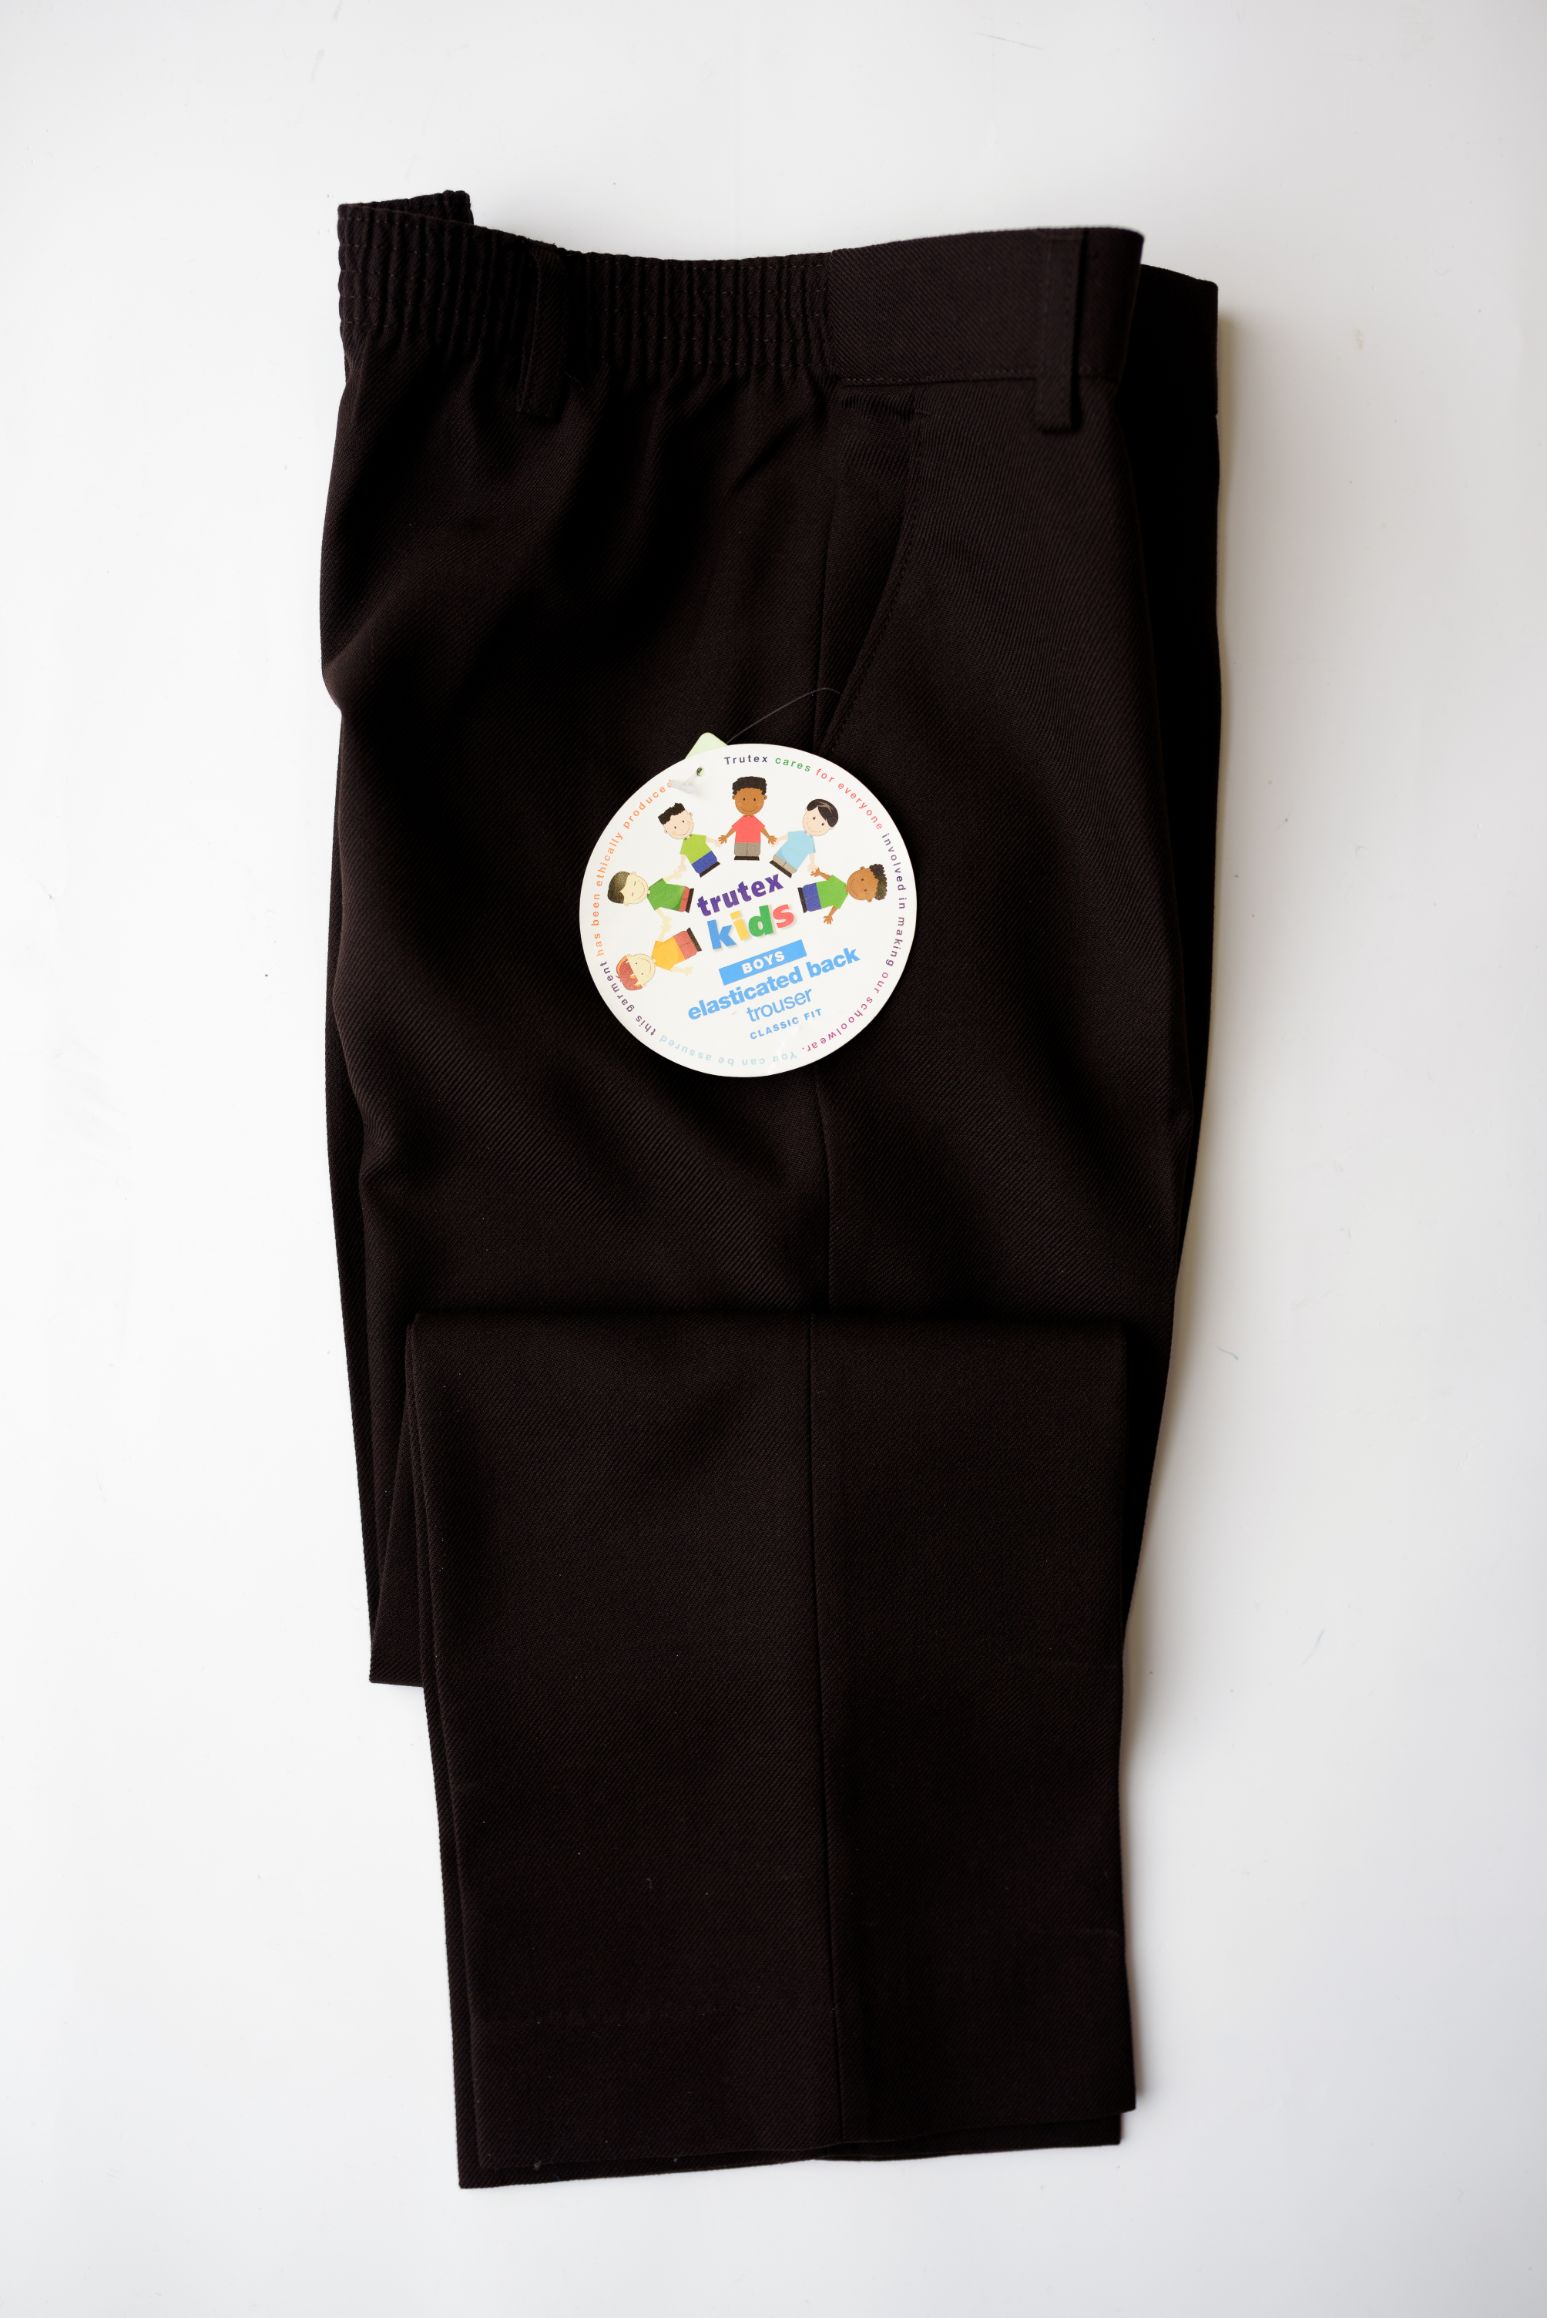 Trutex Brown School elastic trousers